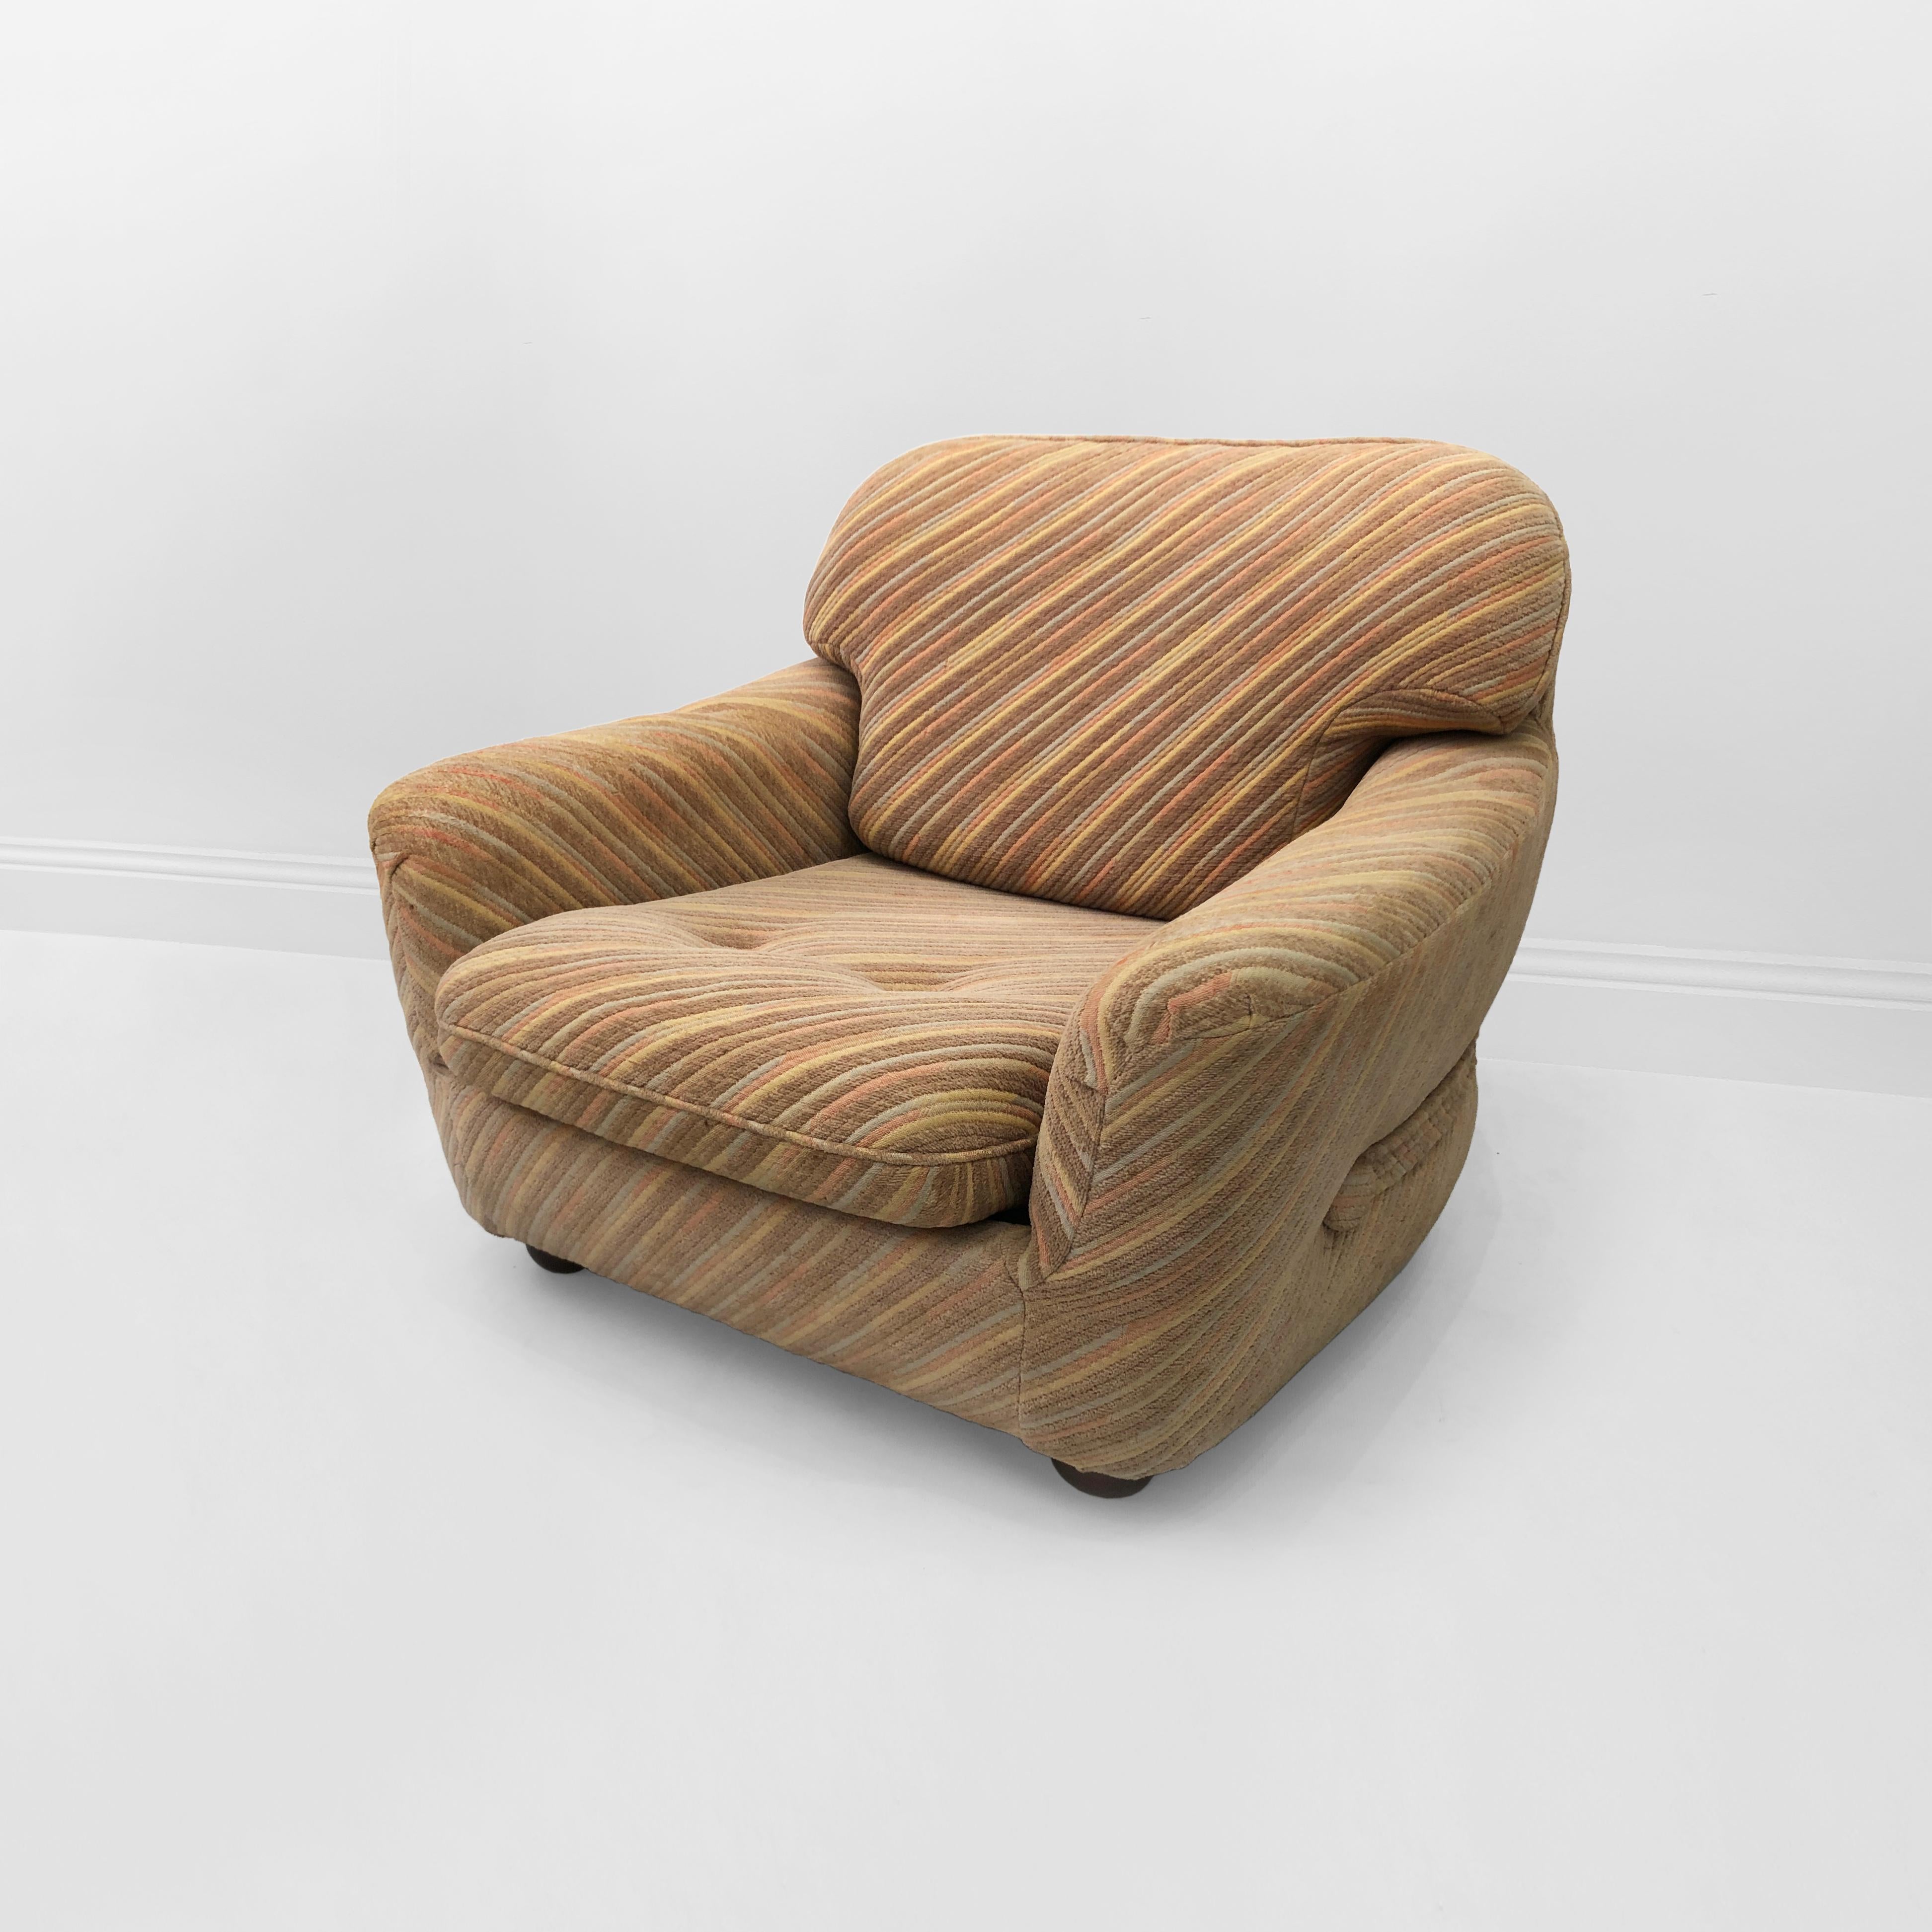 Wood Zorzi Italian Pastel Lounge Armchair 1970s Adriano Piazzesi Scarpa Style For Sale